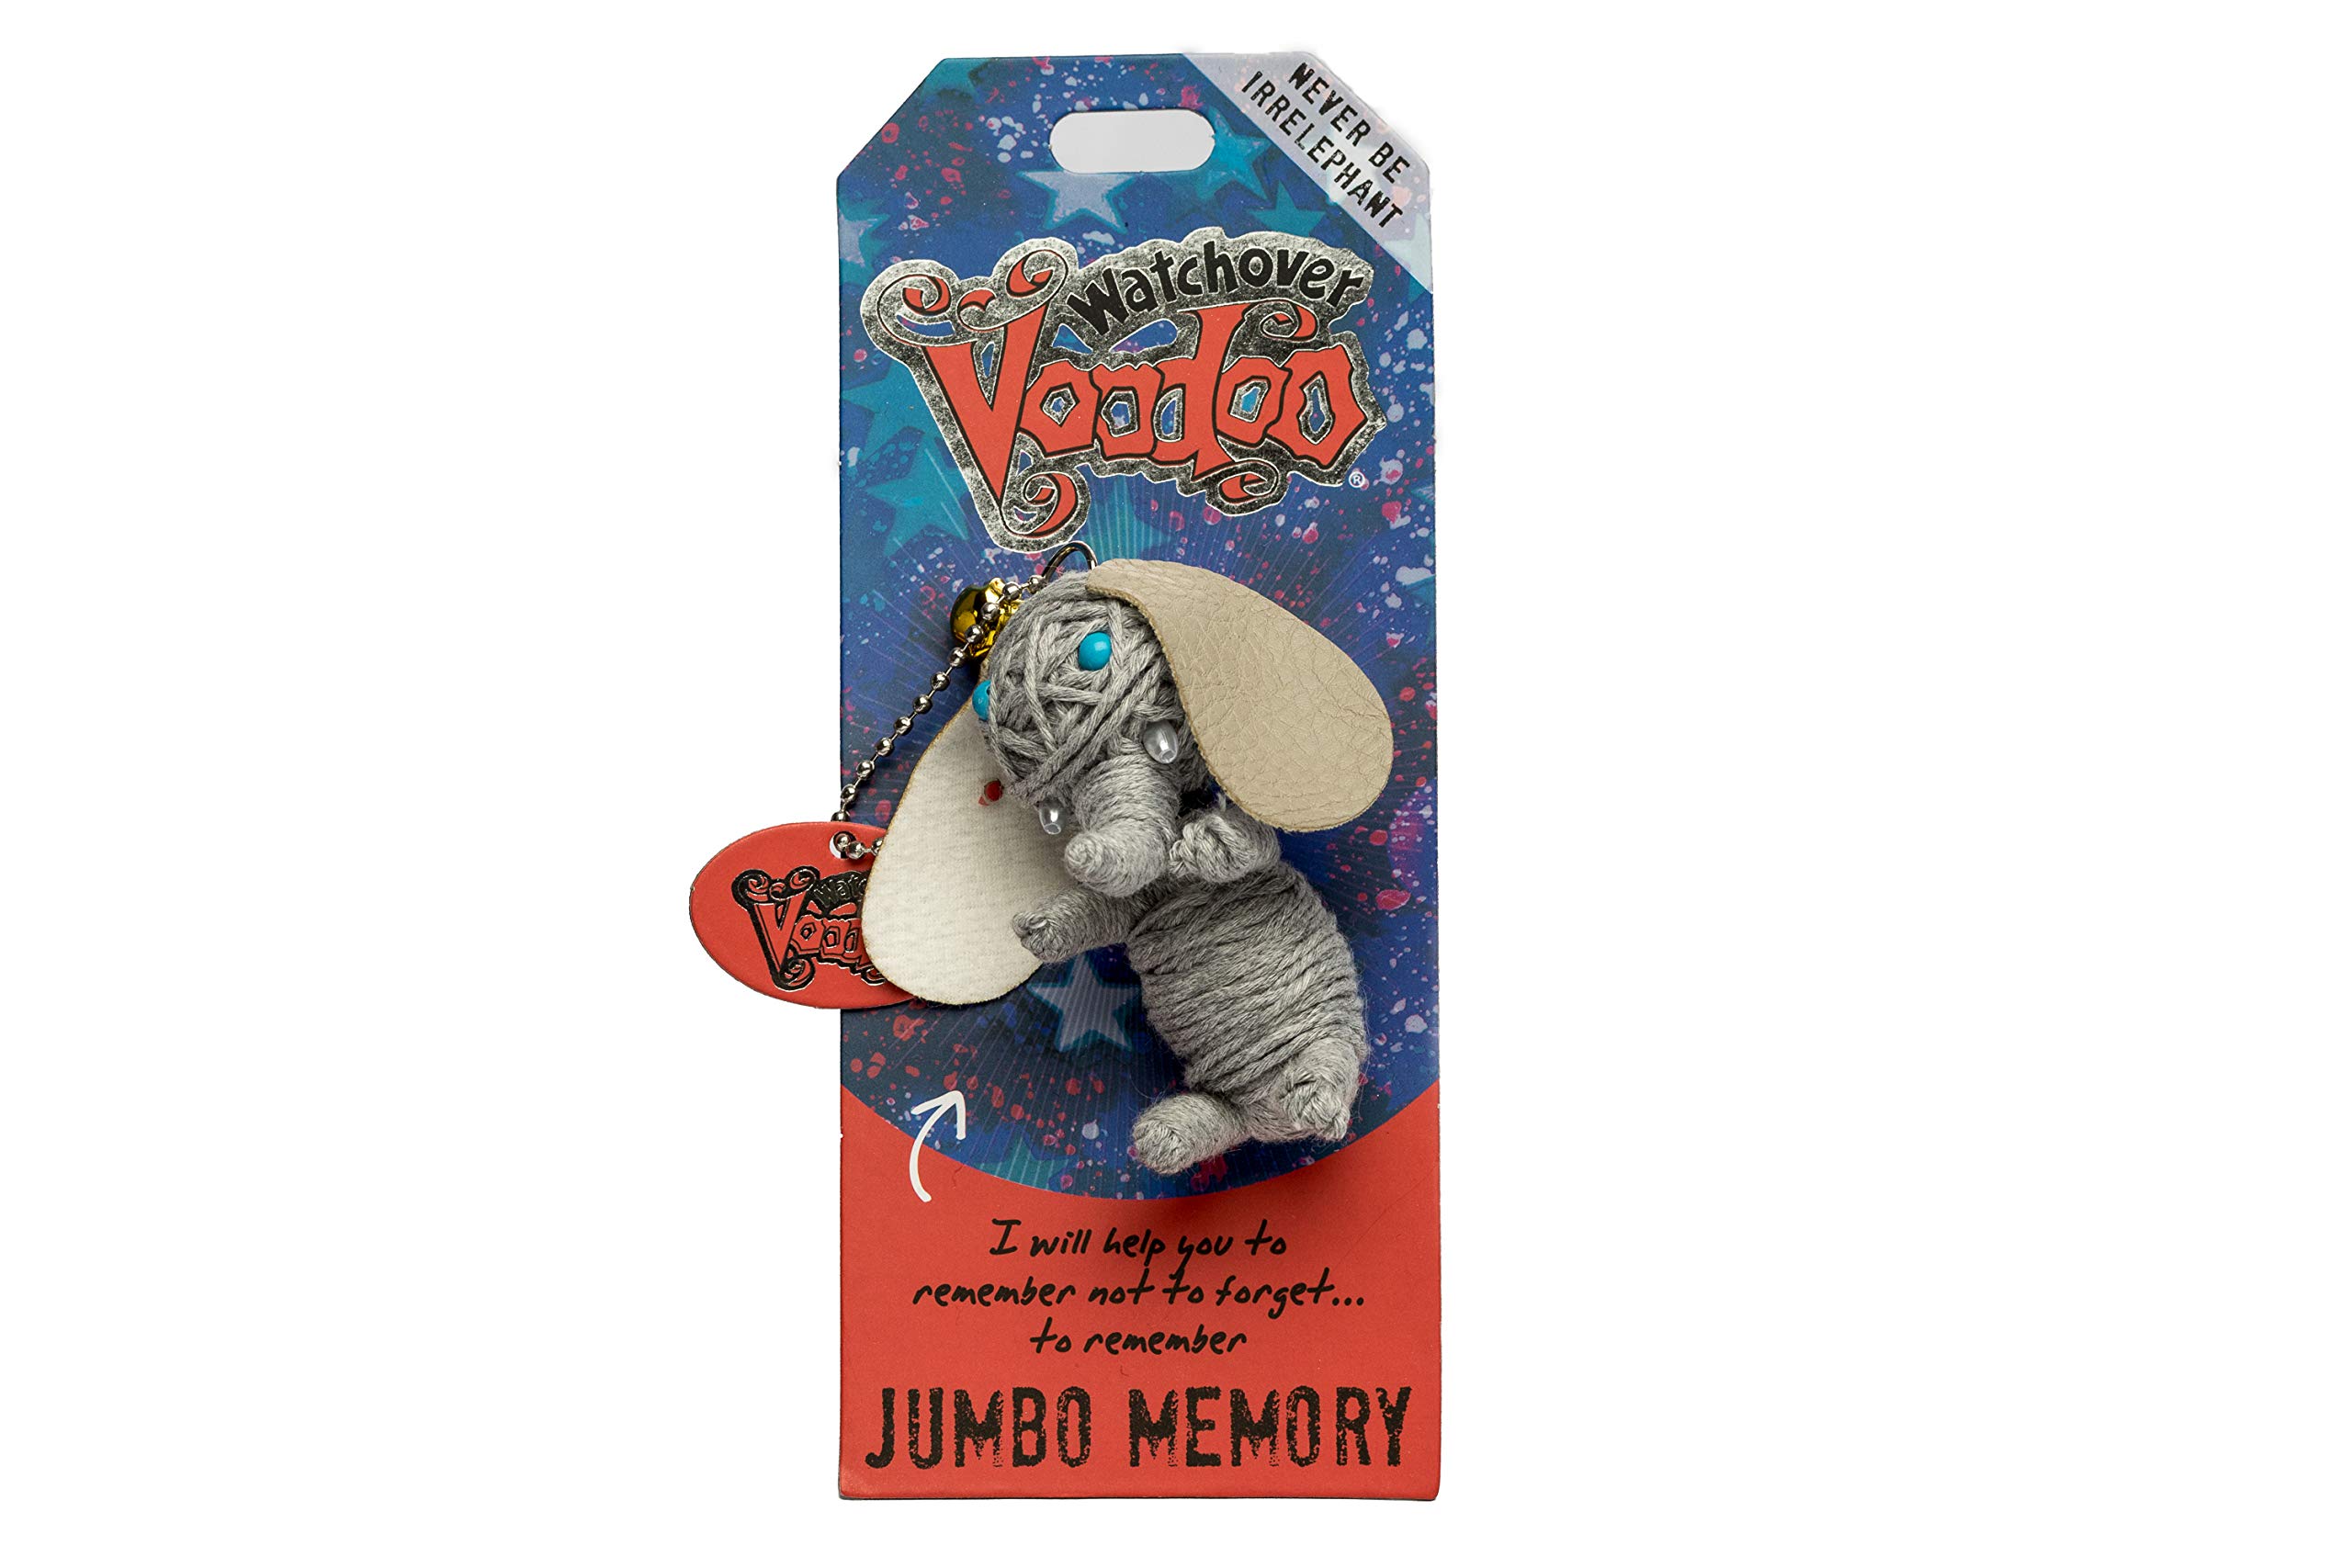 Watchover Voodoo - String Voodoo Doll Keychain – Novelty Voodoo Doll for Bag, Luggage or Car Mirror - Jumbo Memory Voodoo Keychain, 5 inches